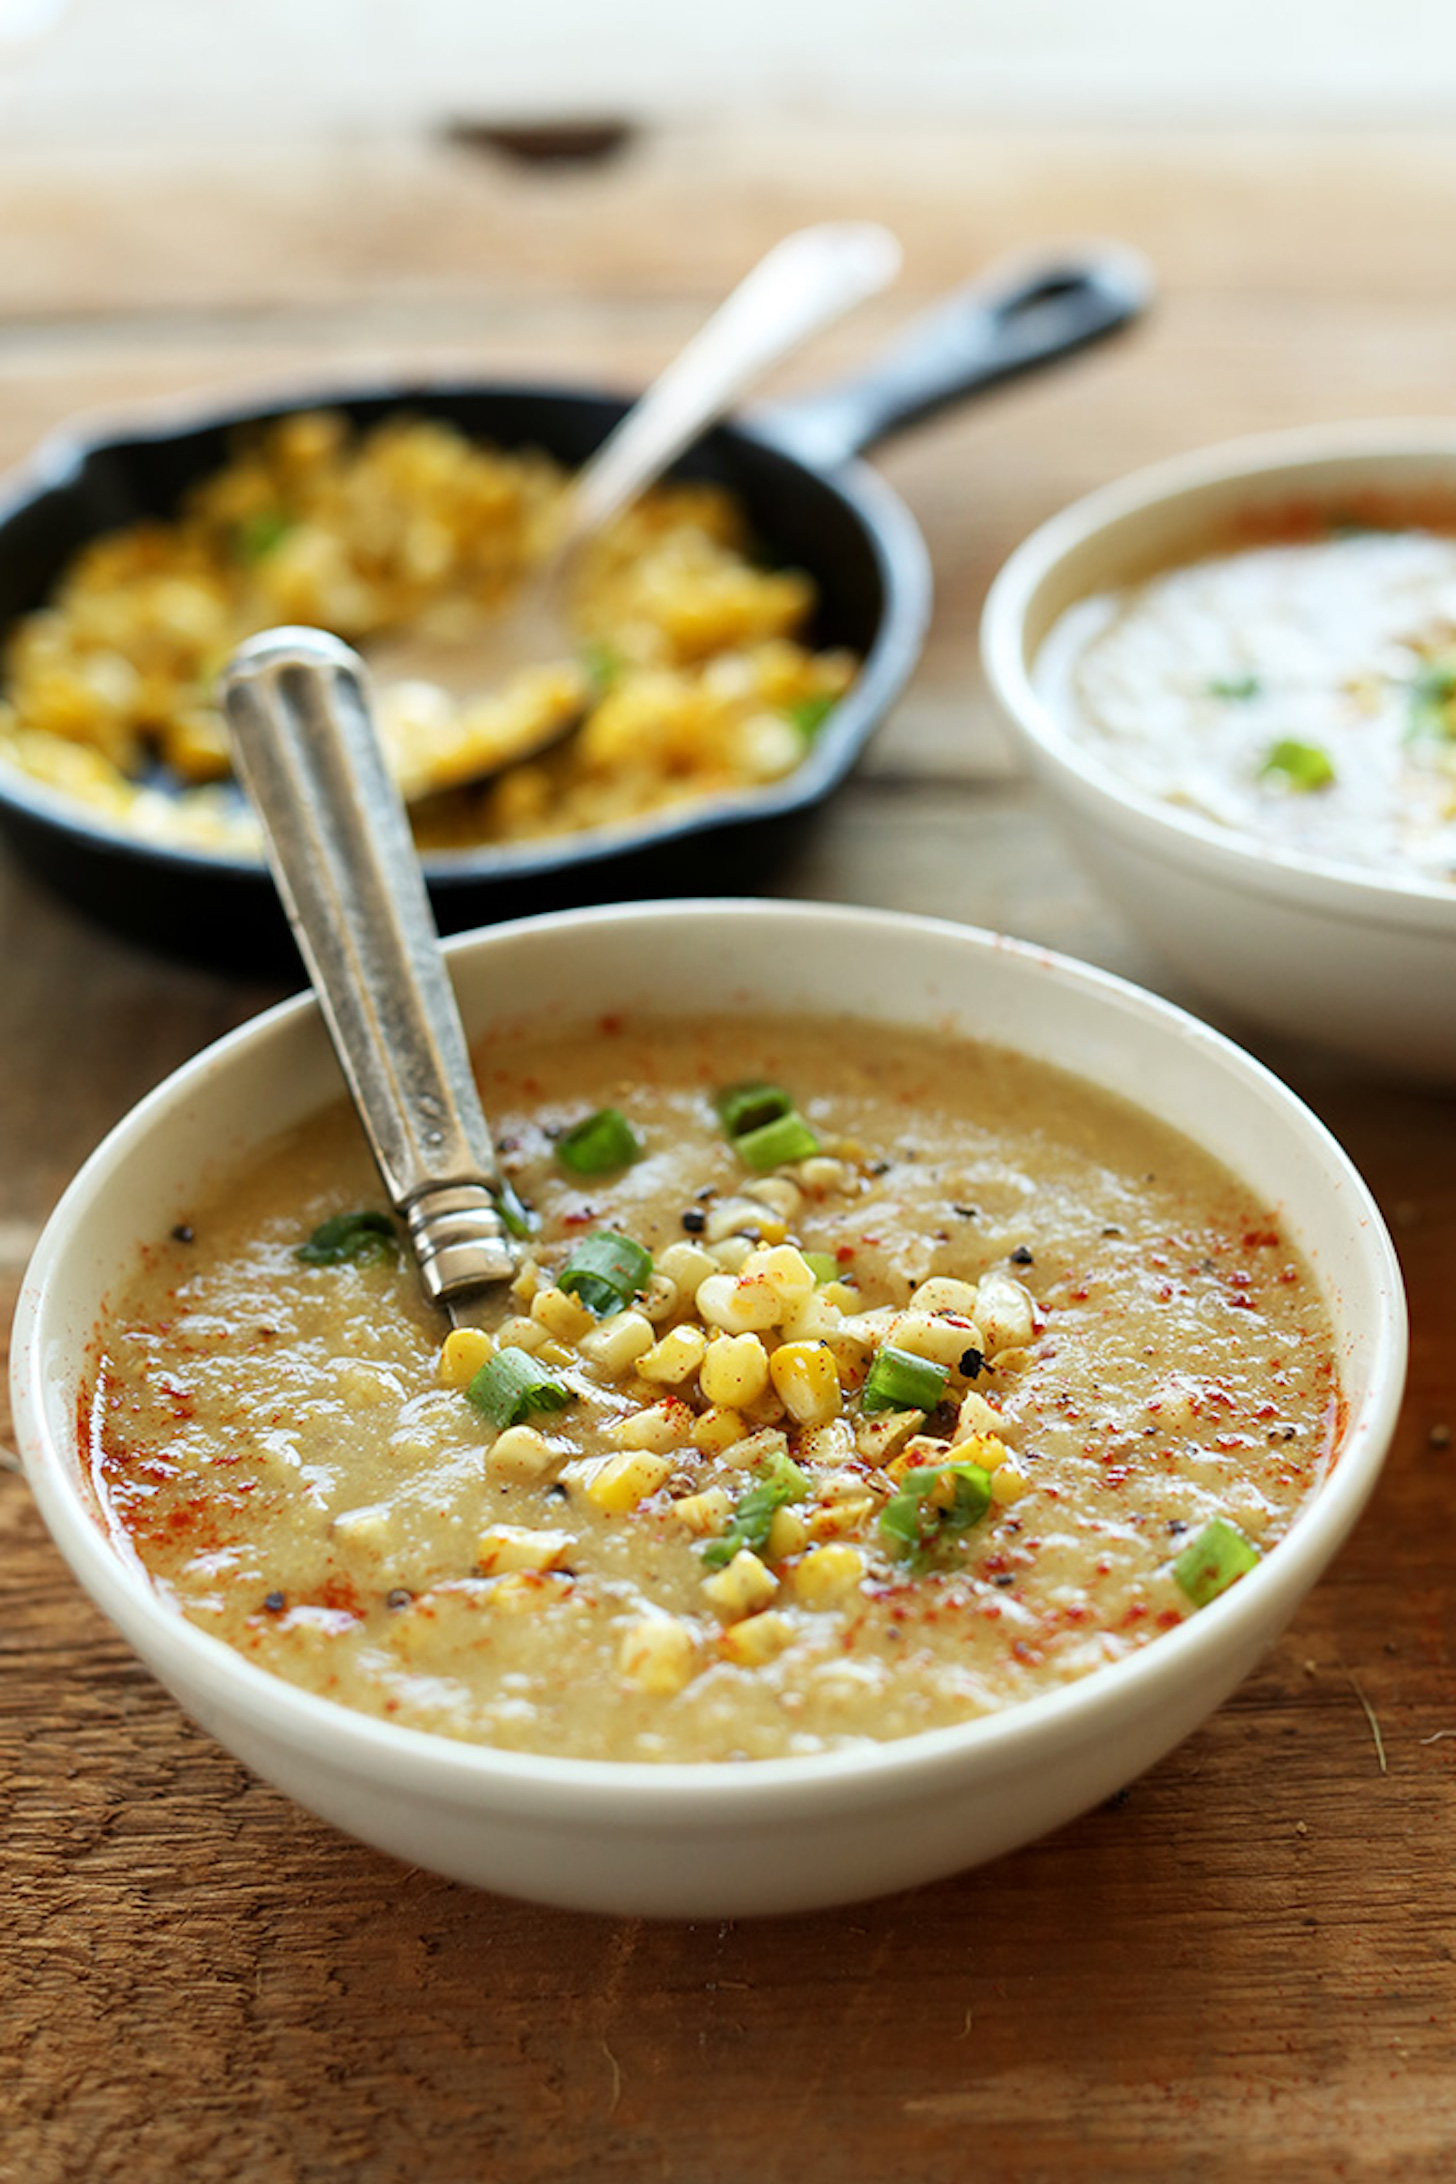 https://minimalistbaker.com/wp-content/uploads/2014/08/Summer-Corn-Soup-9-ingredients-30-minute-SO-savory-and-easy-vegan-glutenfree-1.jpg